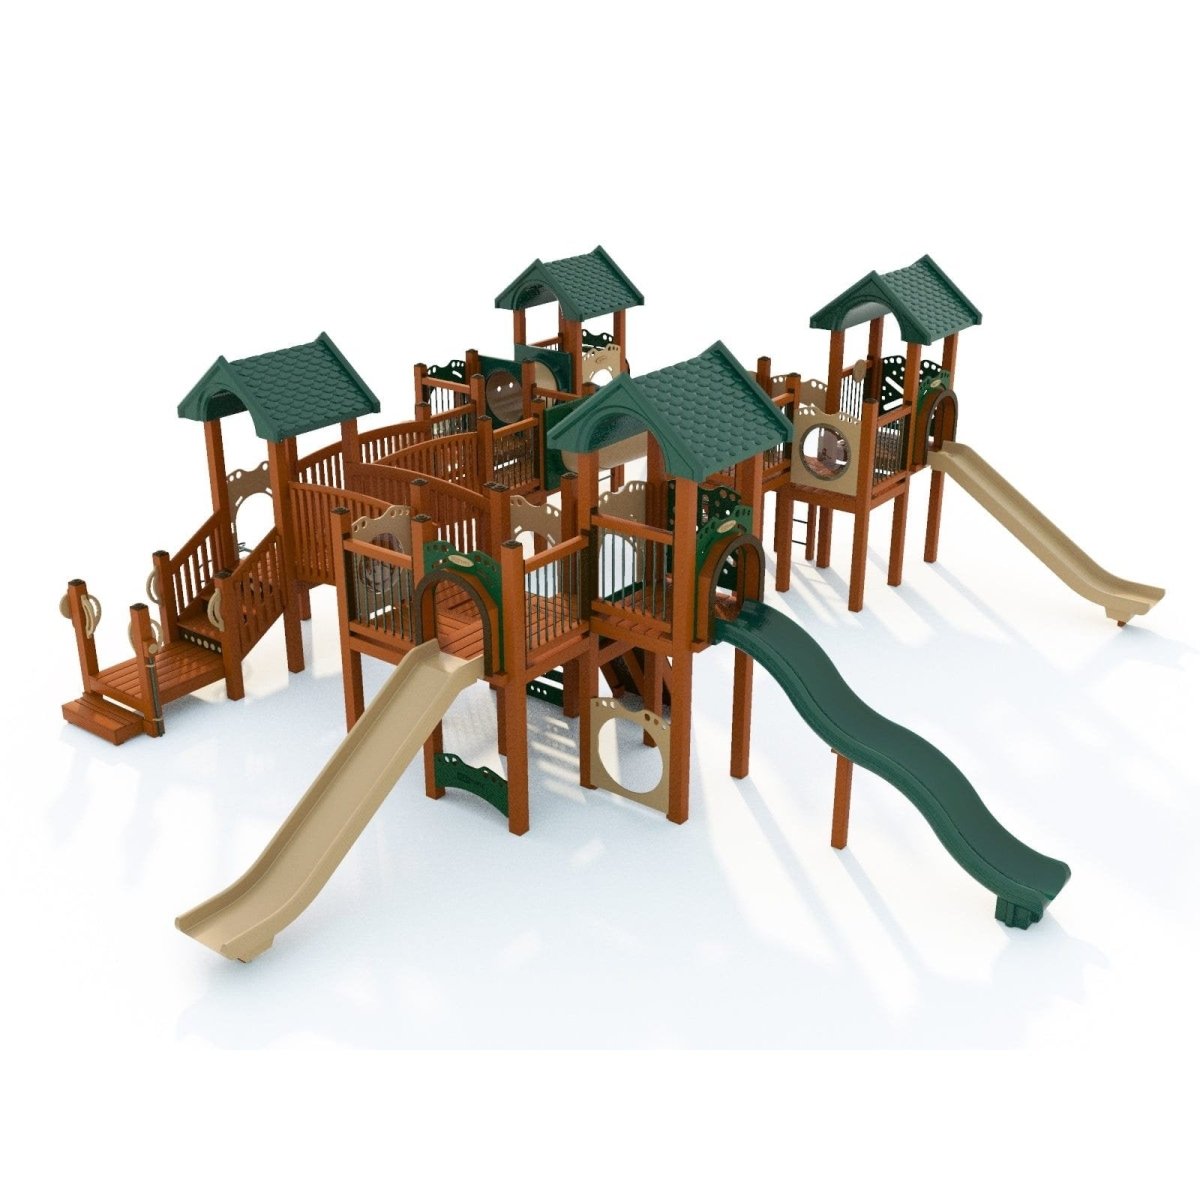 Canopy Climb Playset - School-Age Playgrounds - Playtopia, Inc.